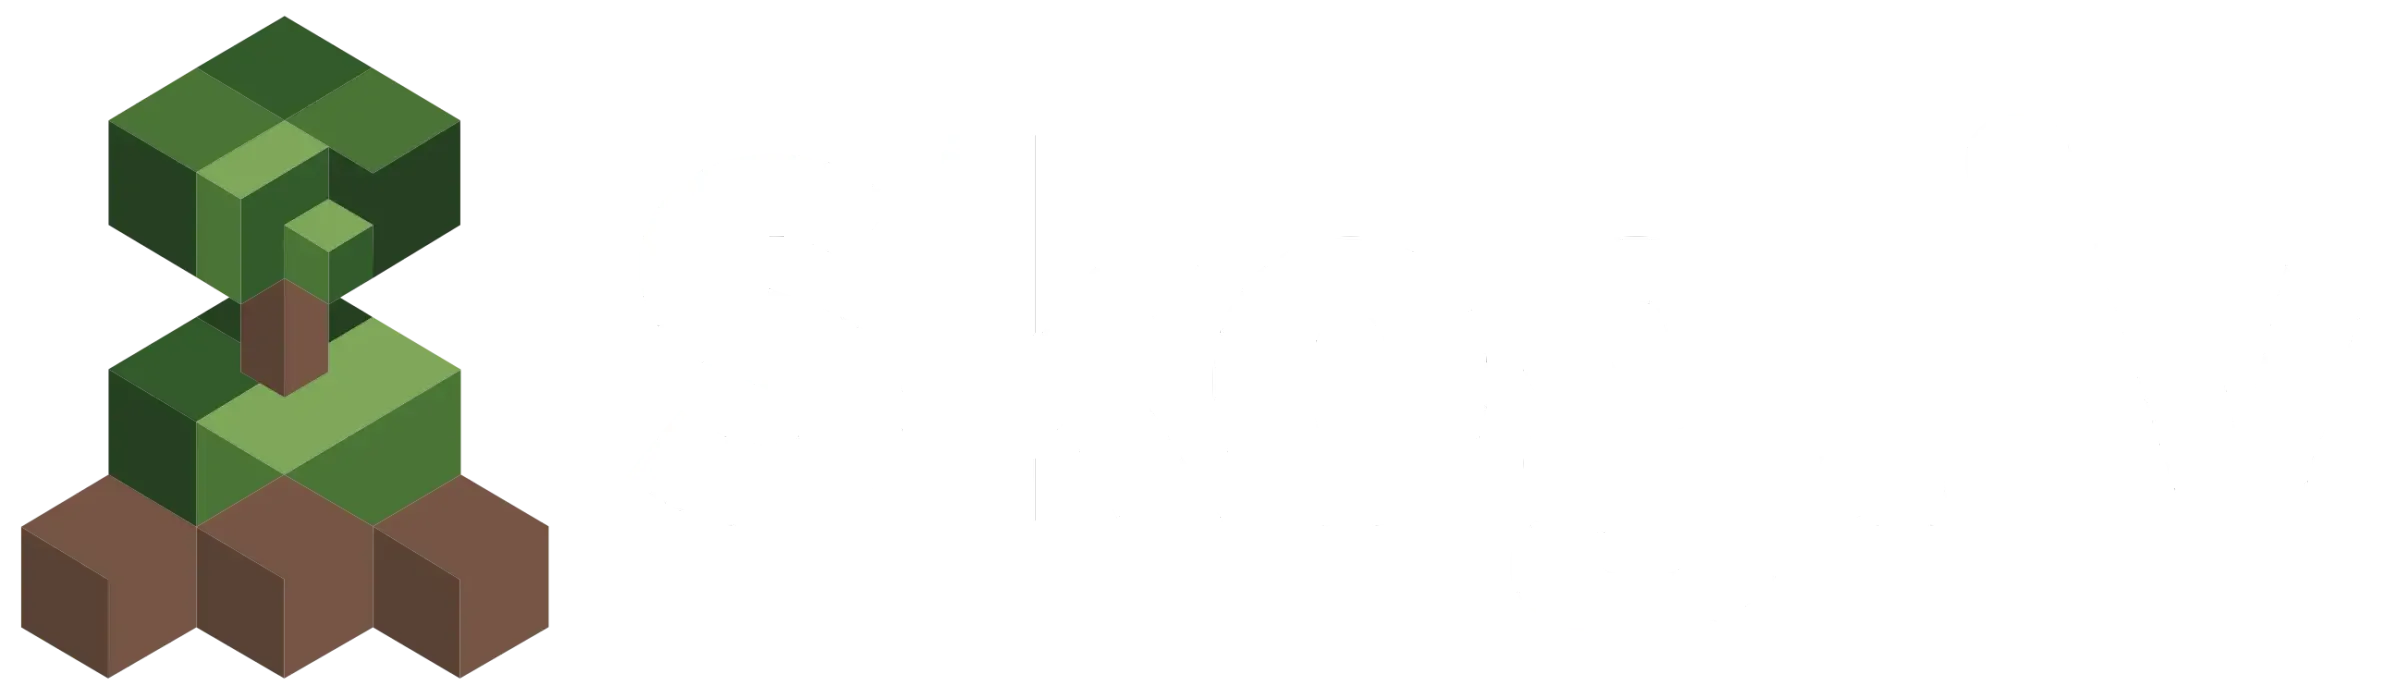 Skoglivs logo